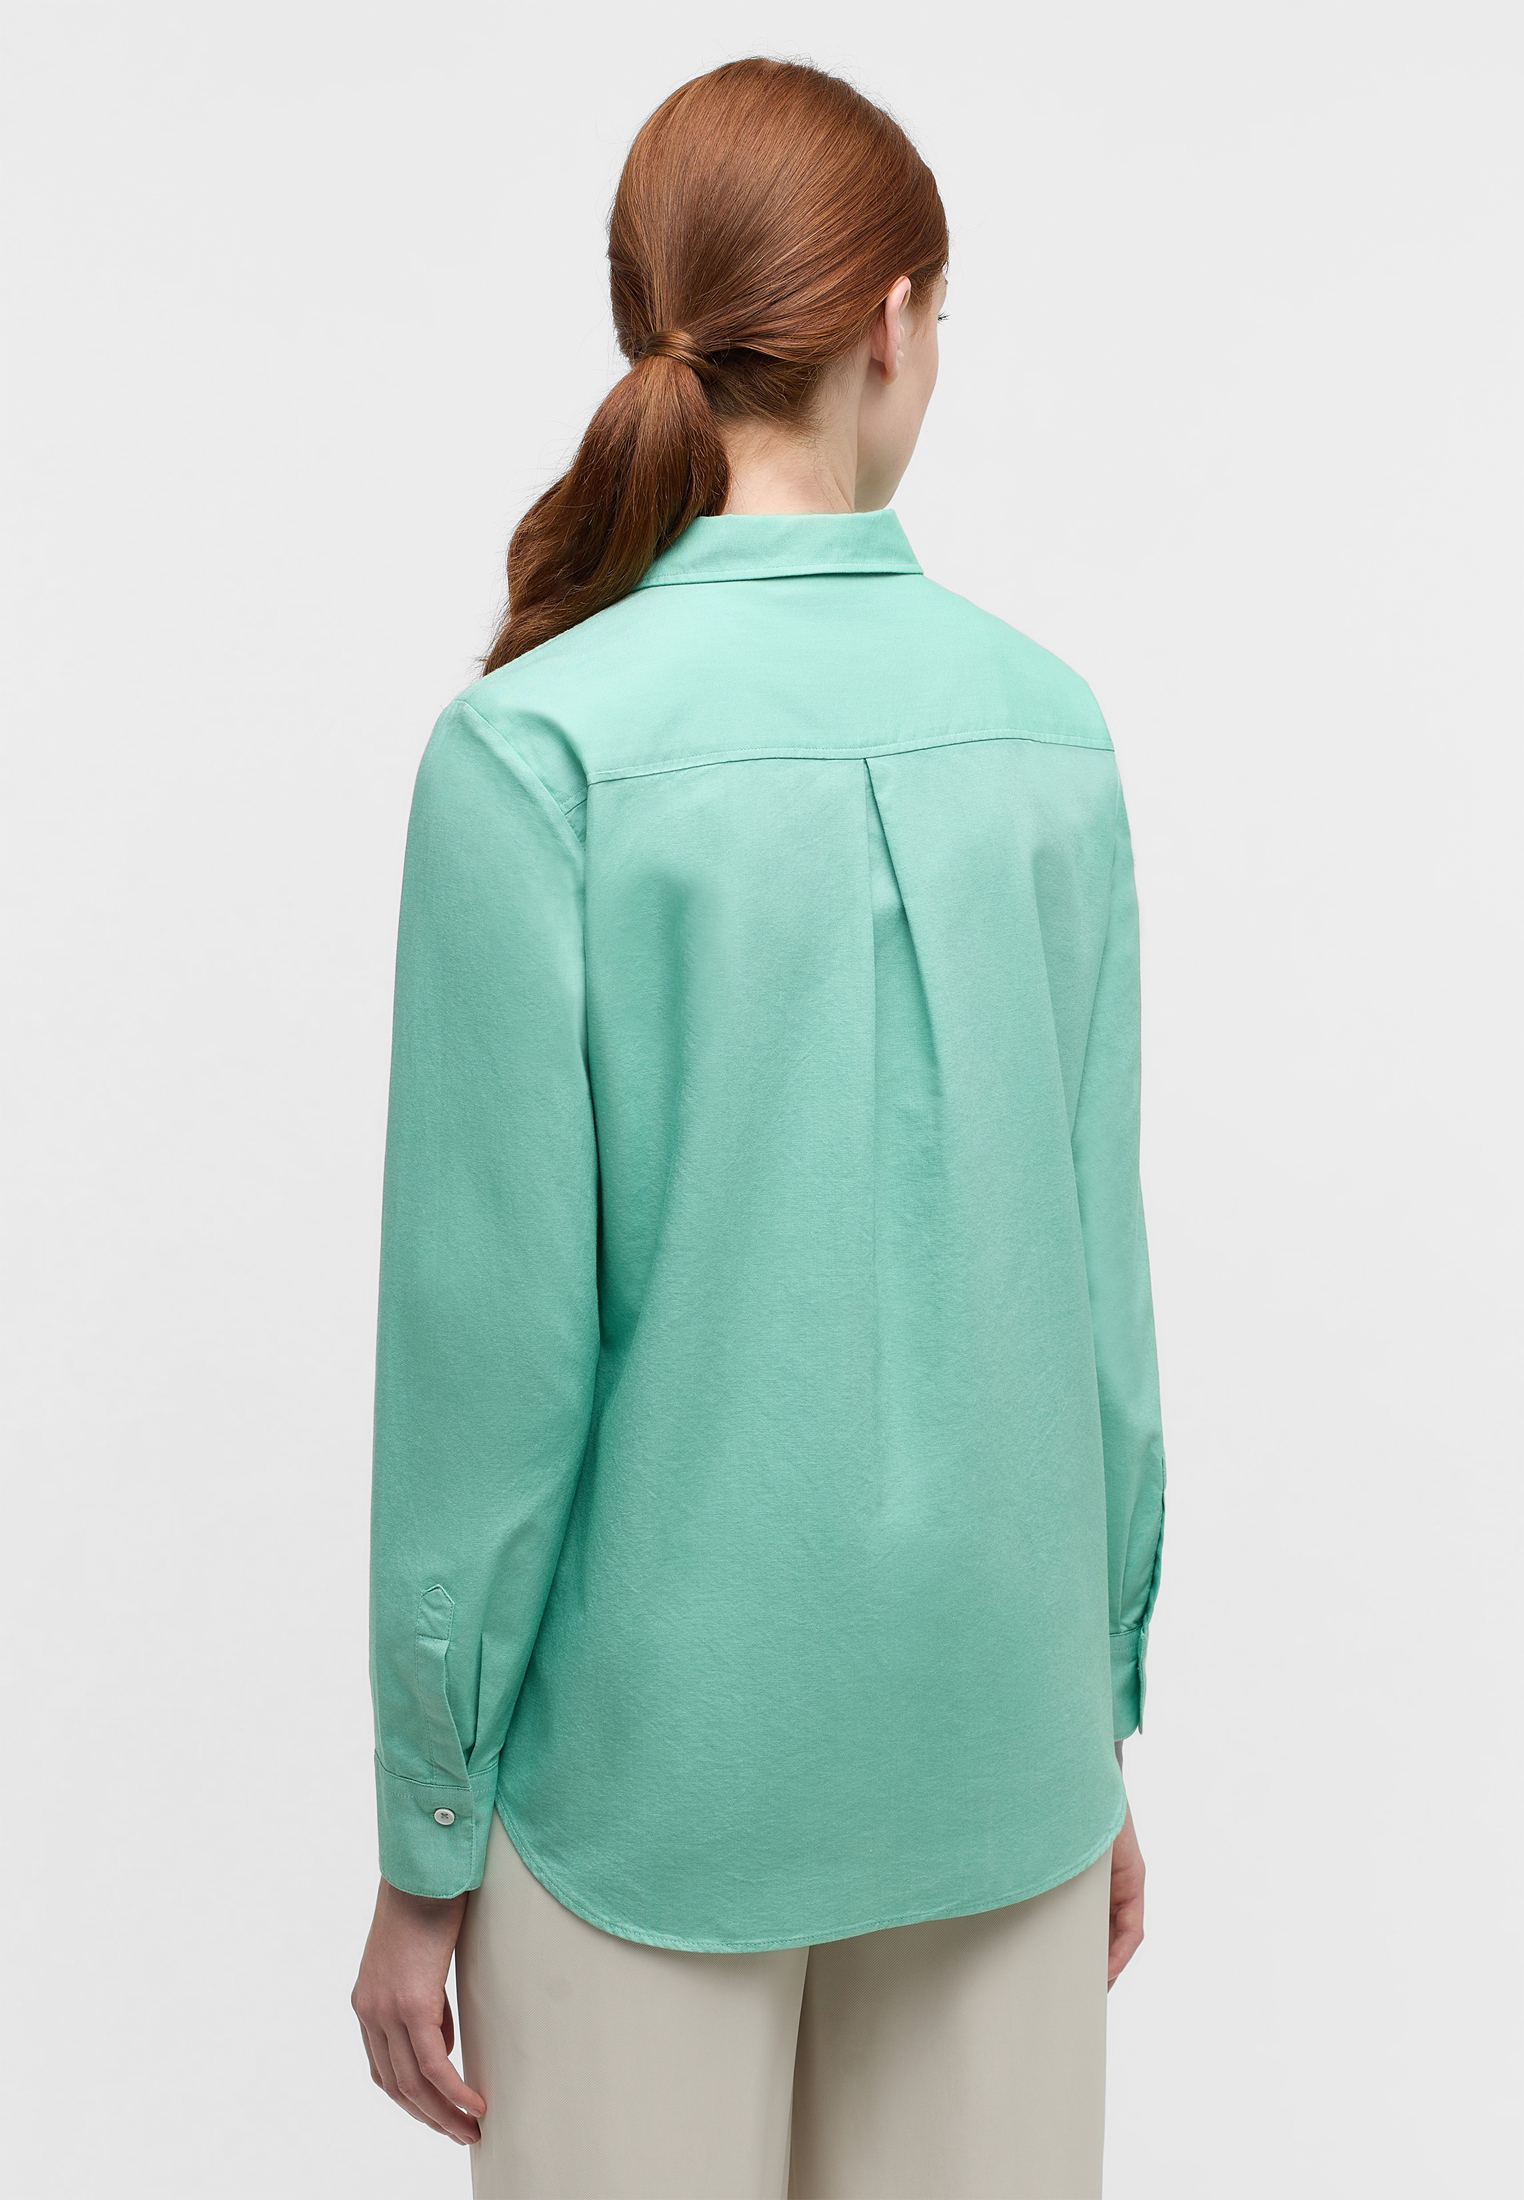 Oxford Shirt Bluse in | | Langarm 2BL04173-04-02-50-1/1 unifarben | 50 hellgrün hellgrün 